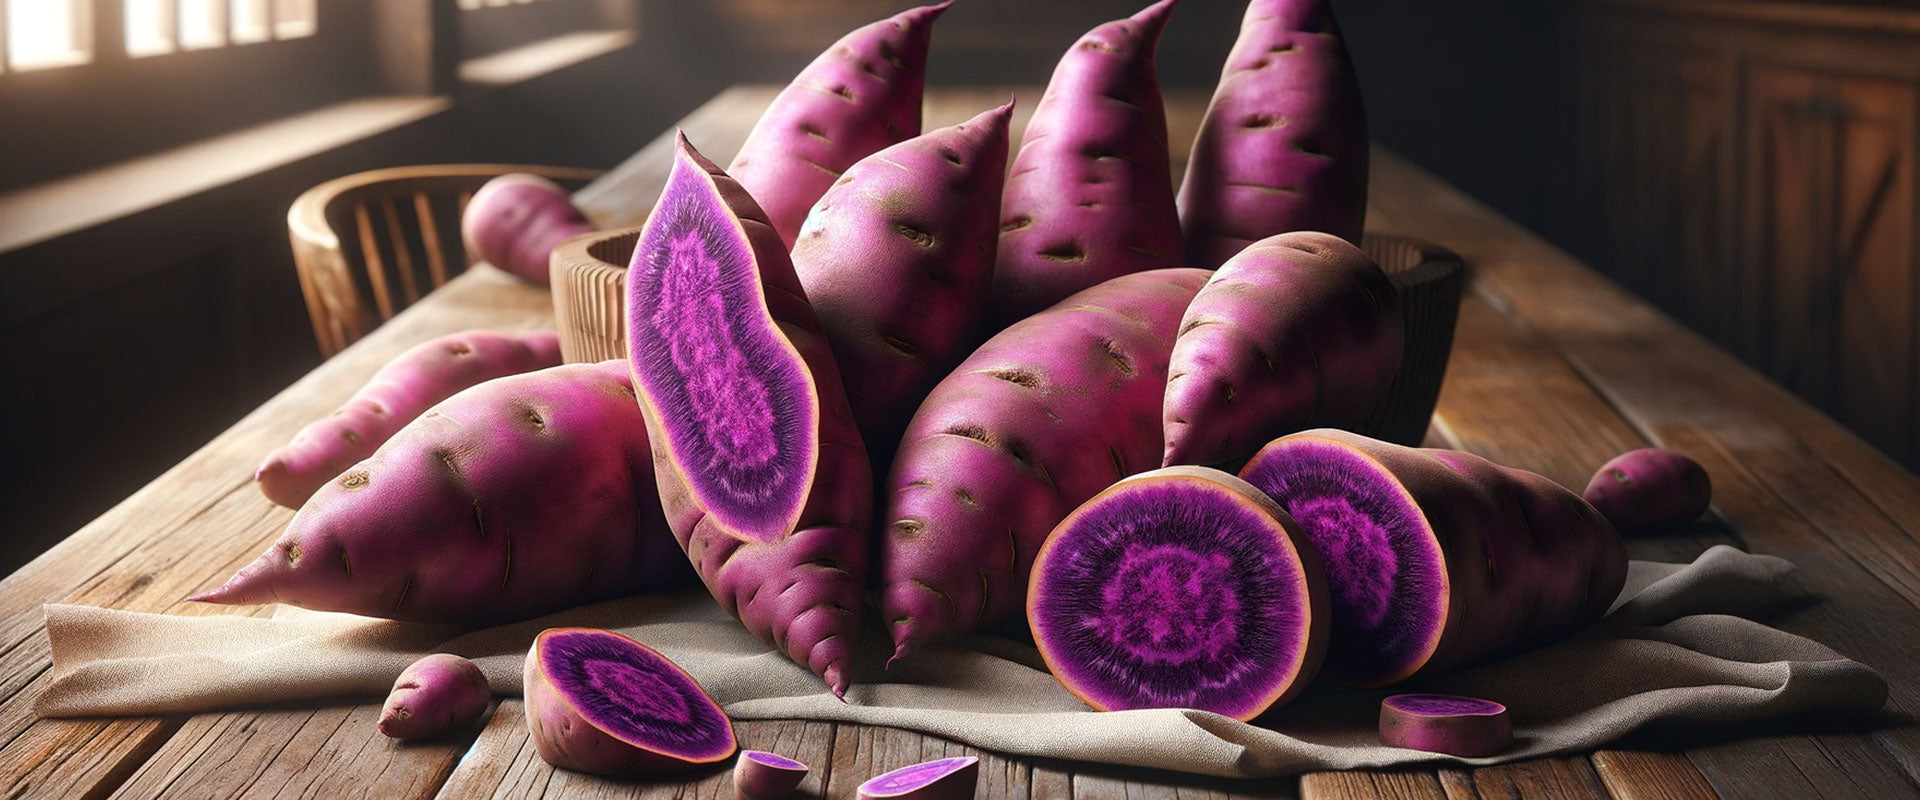 purple sweet potatoes for natural purple food coloring